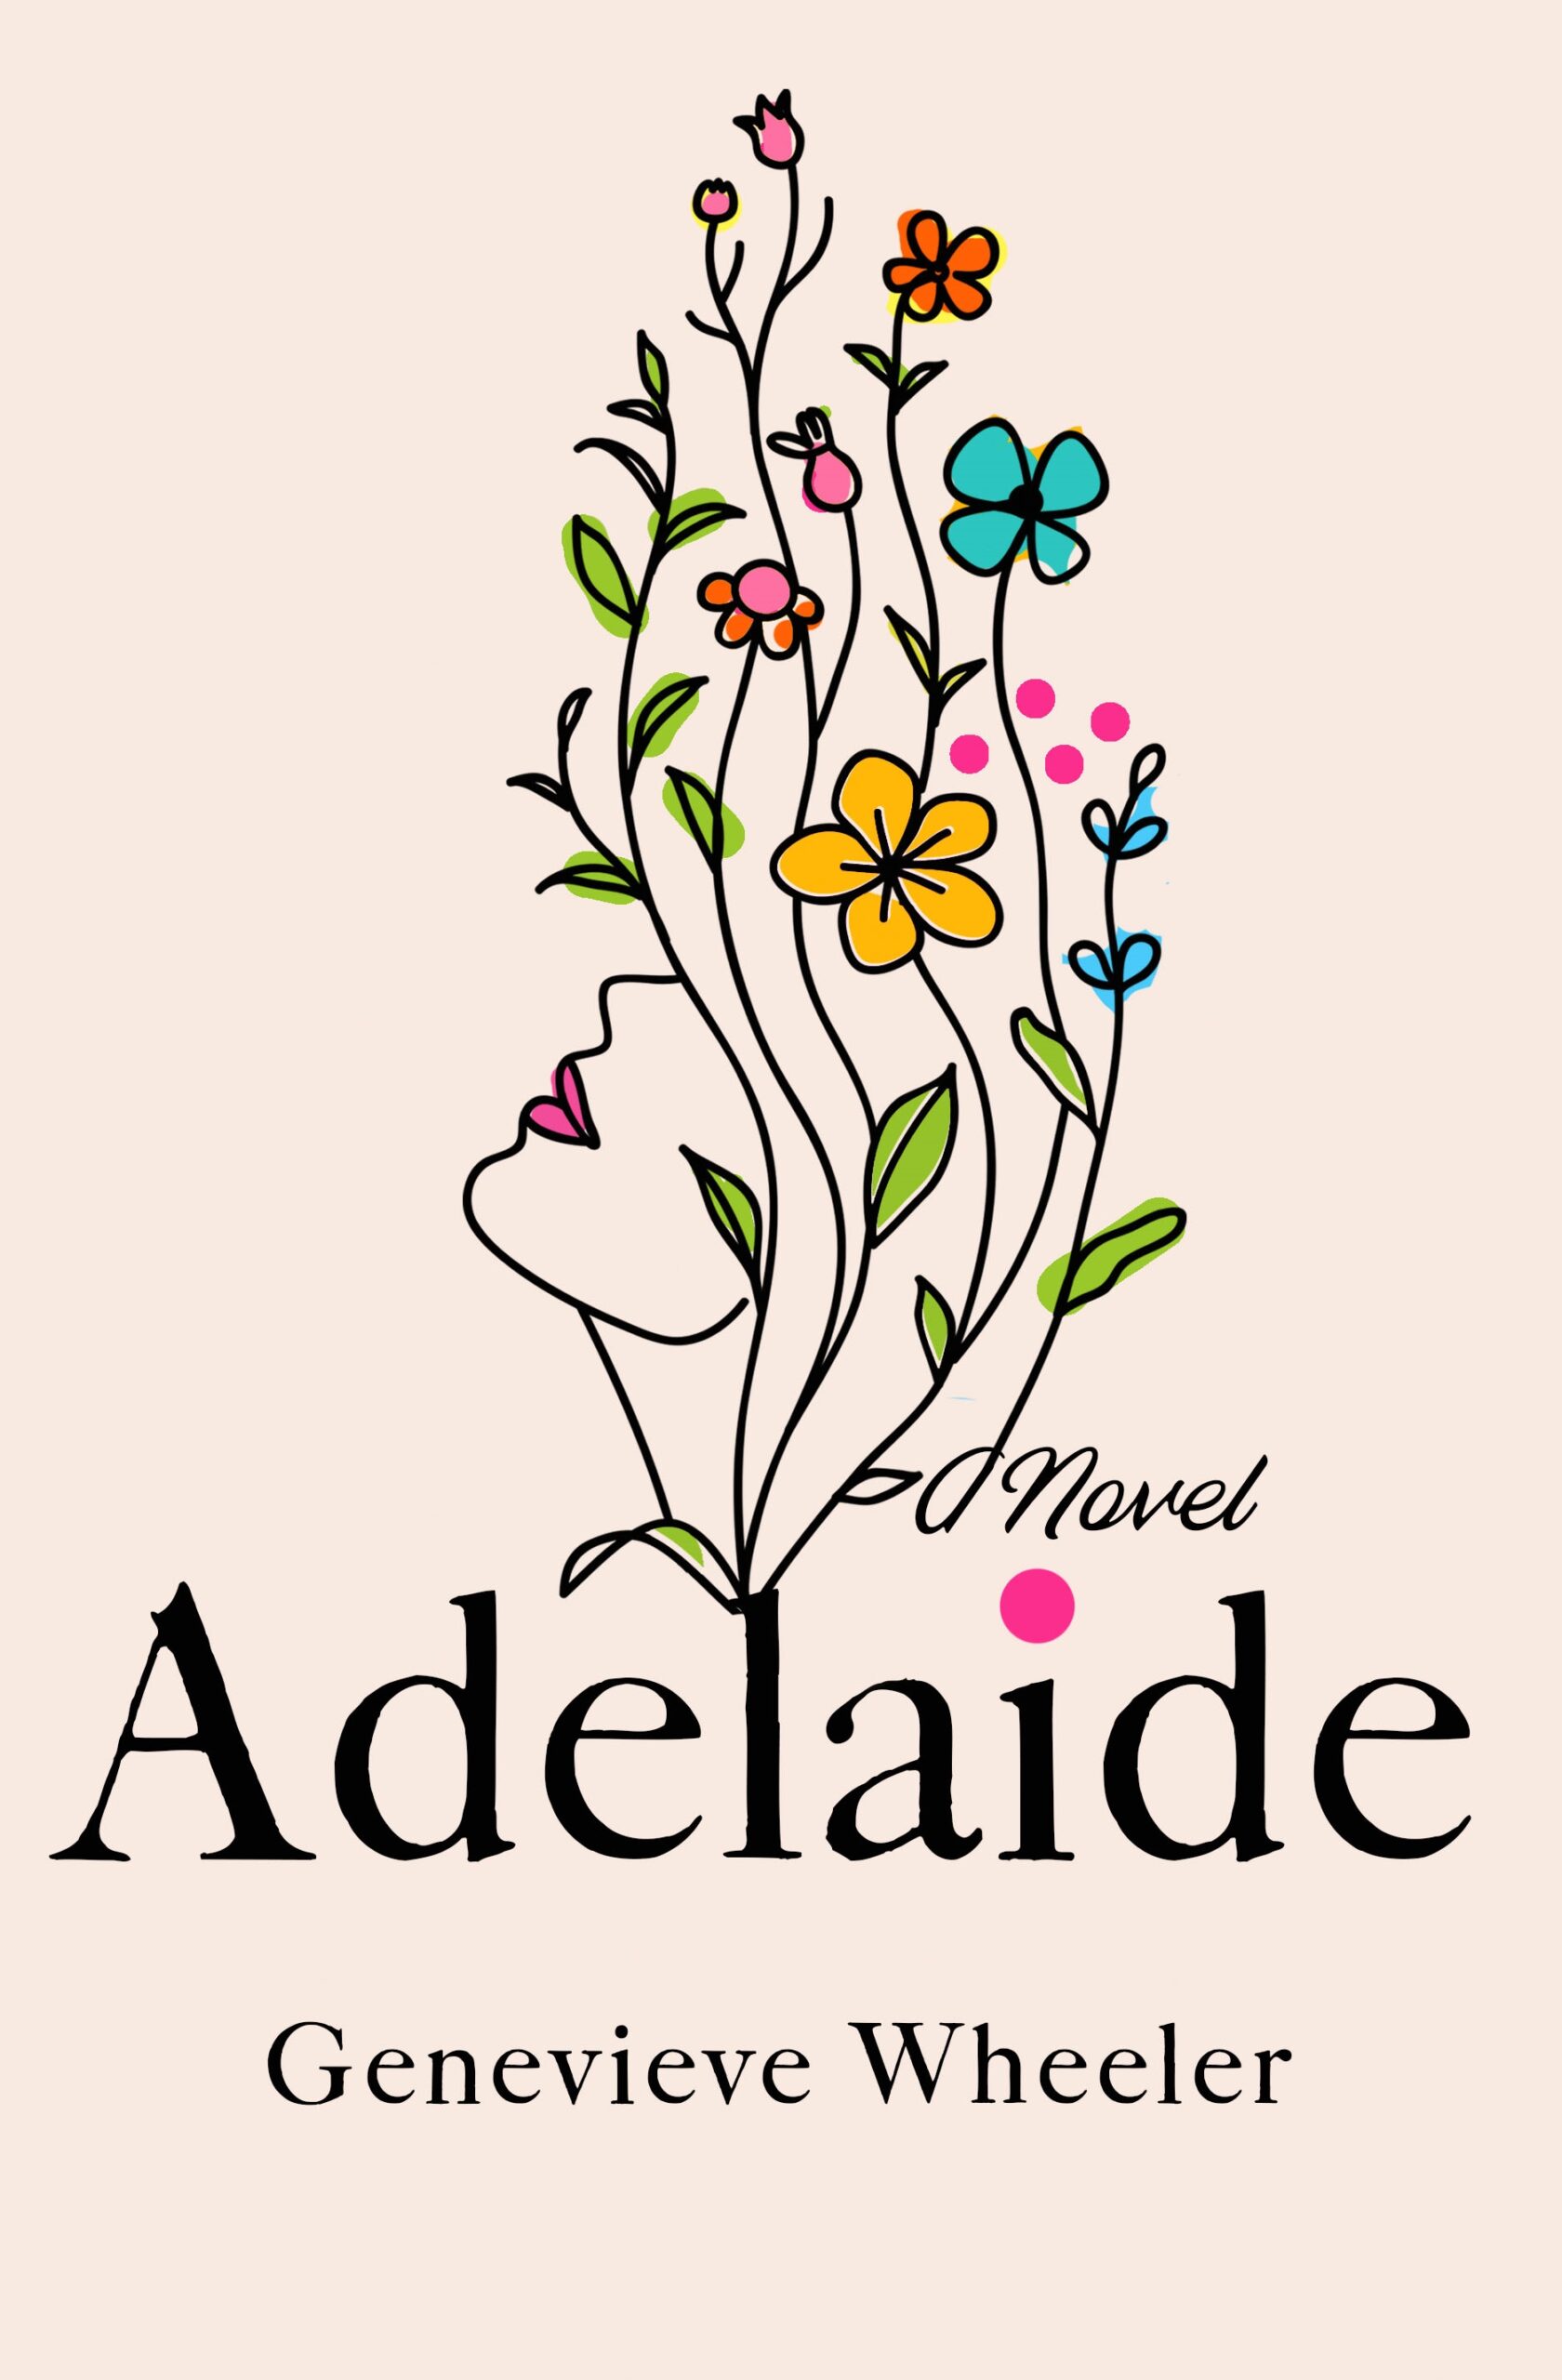 Book Launch: Adelaide by Genevieve Wheeler in Conversation with Hannah Orenstein